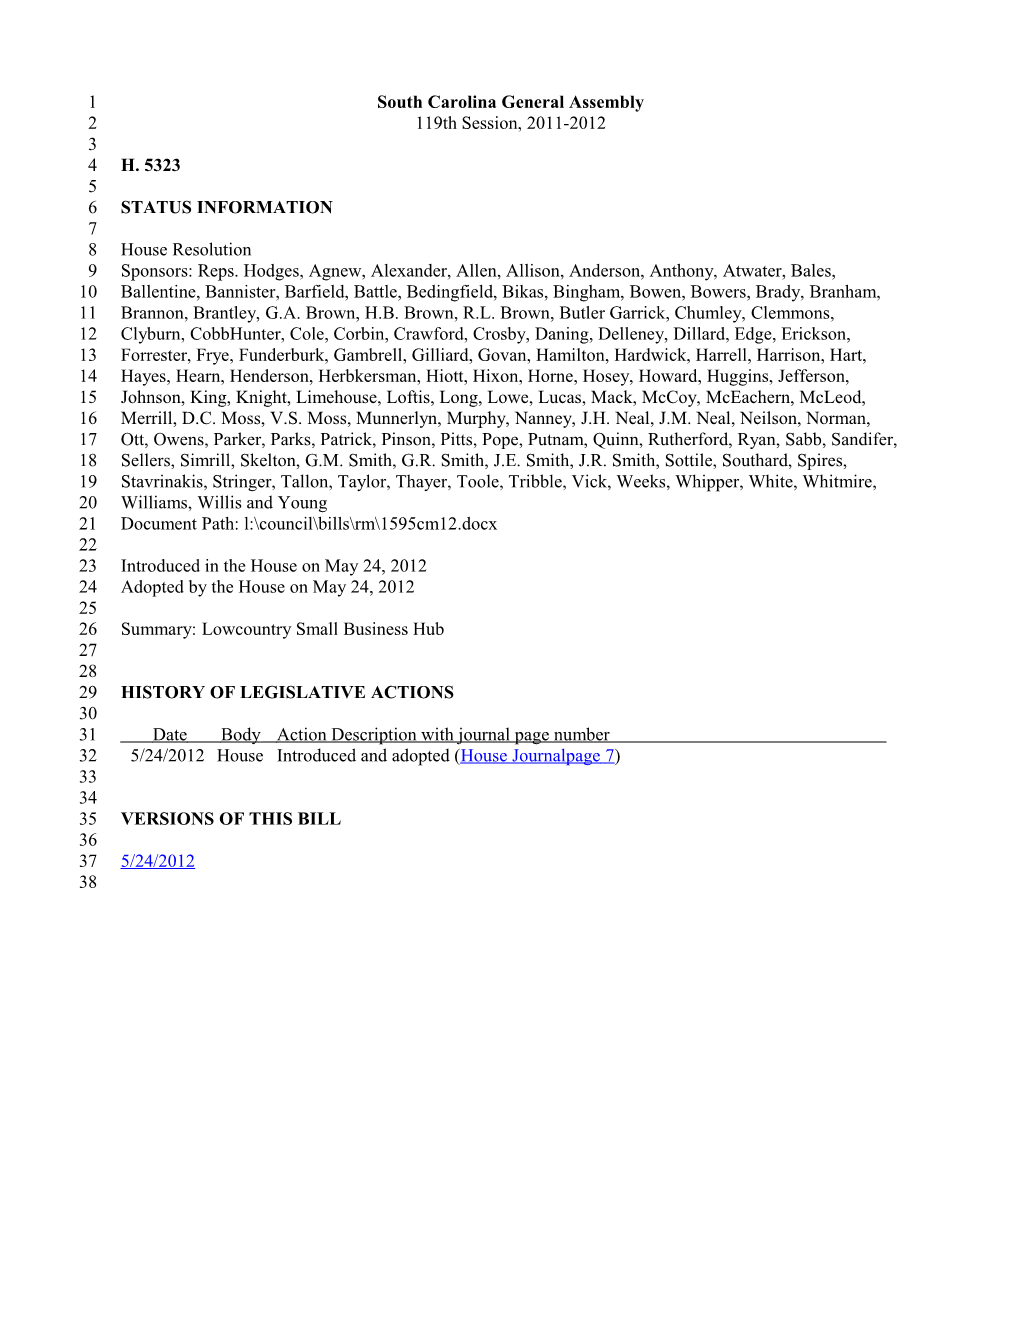 2011-2012 Bill 5323: Lowcountry Small Business Hub - South Carolina Legislature Online